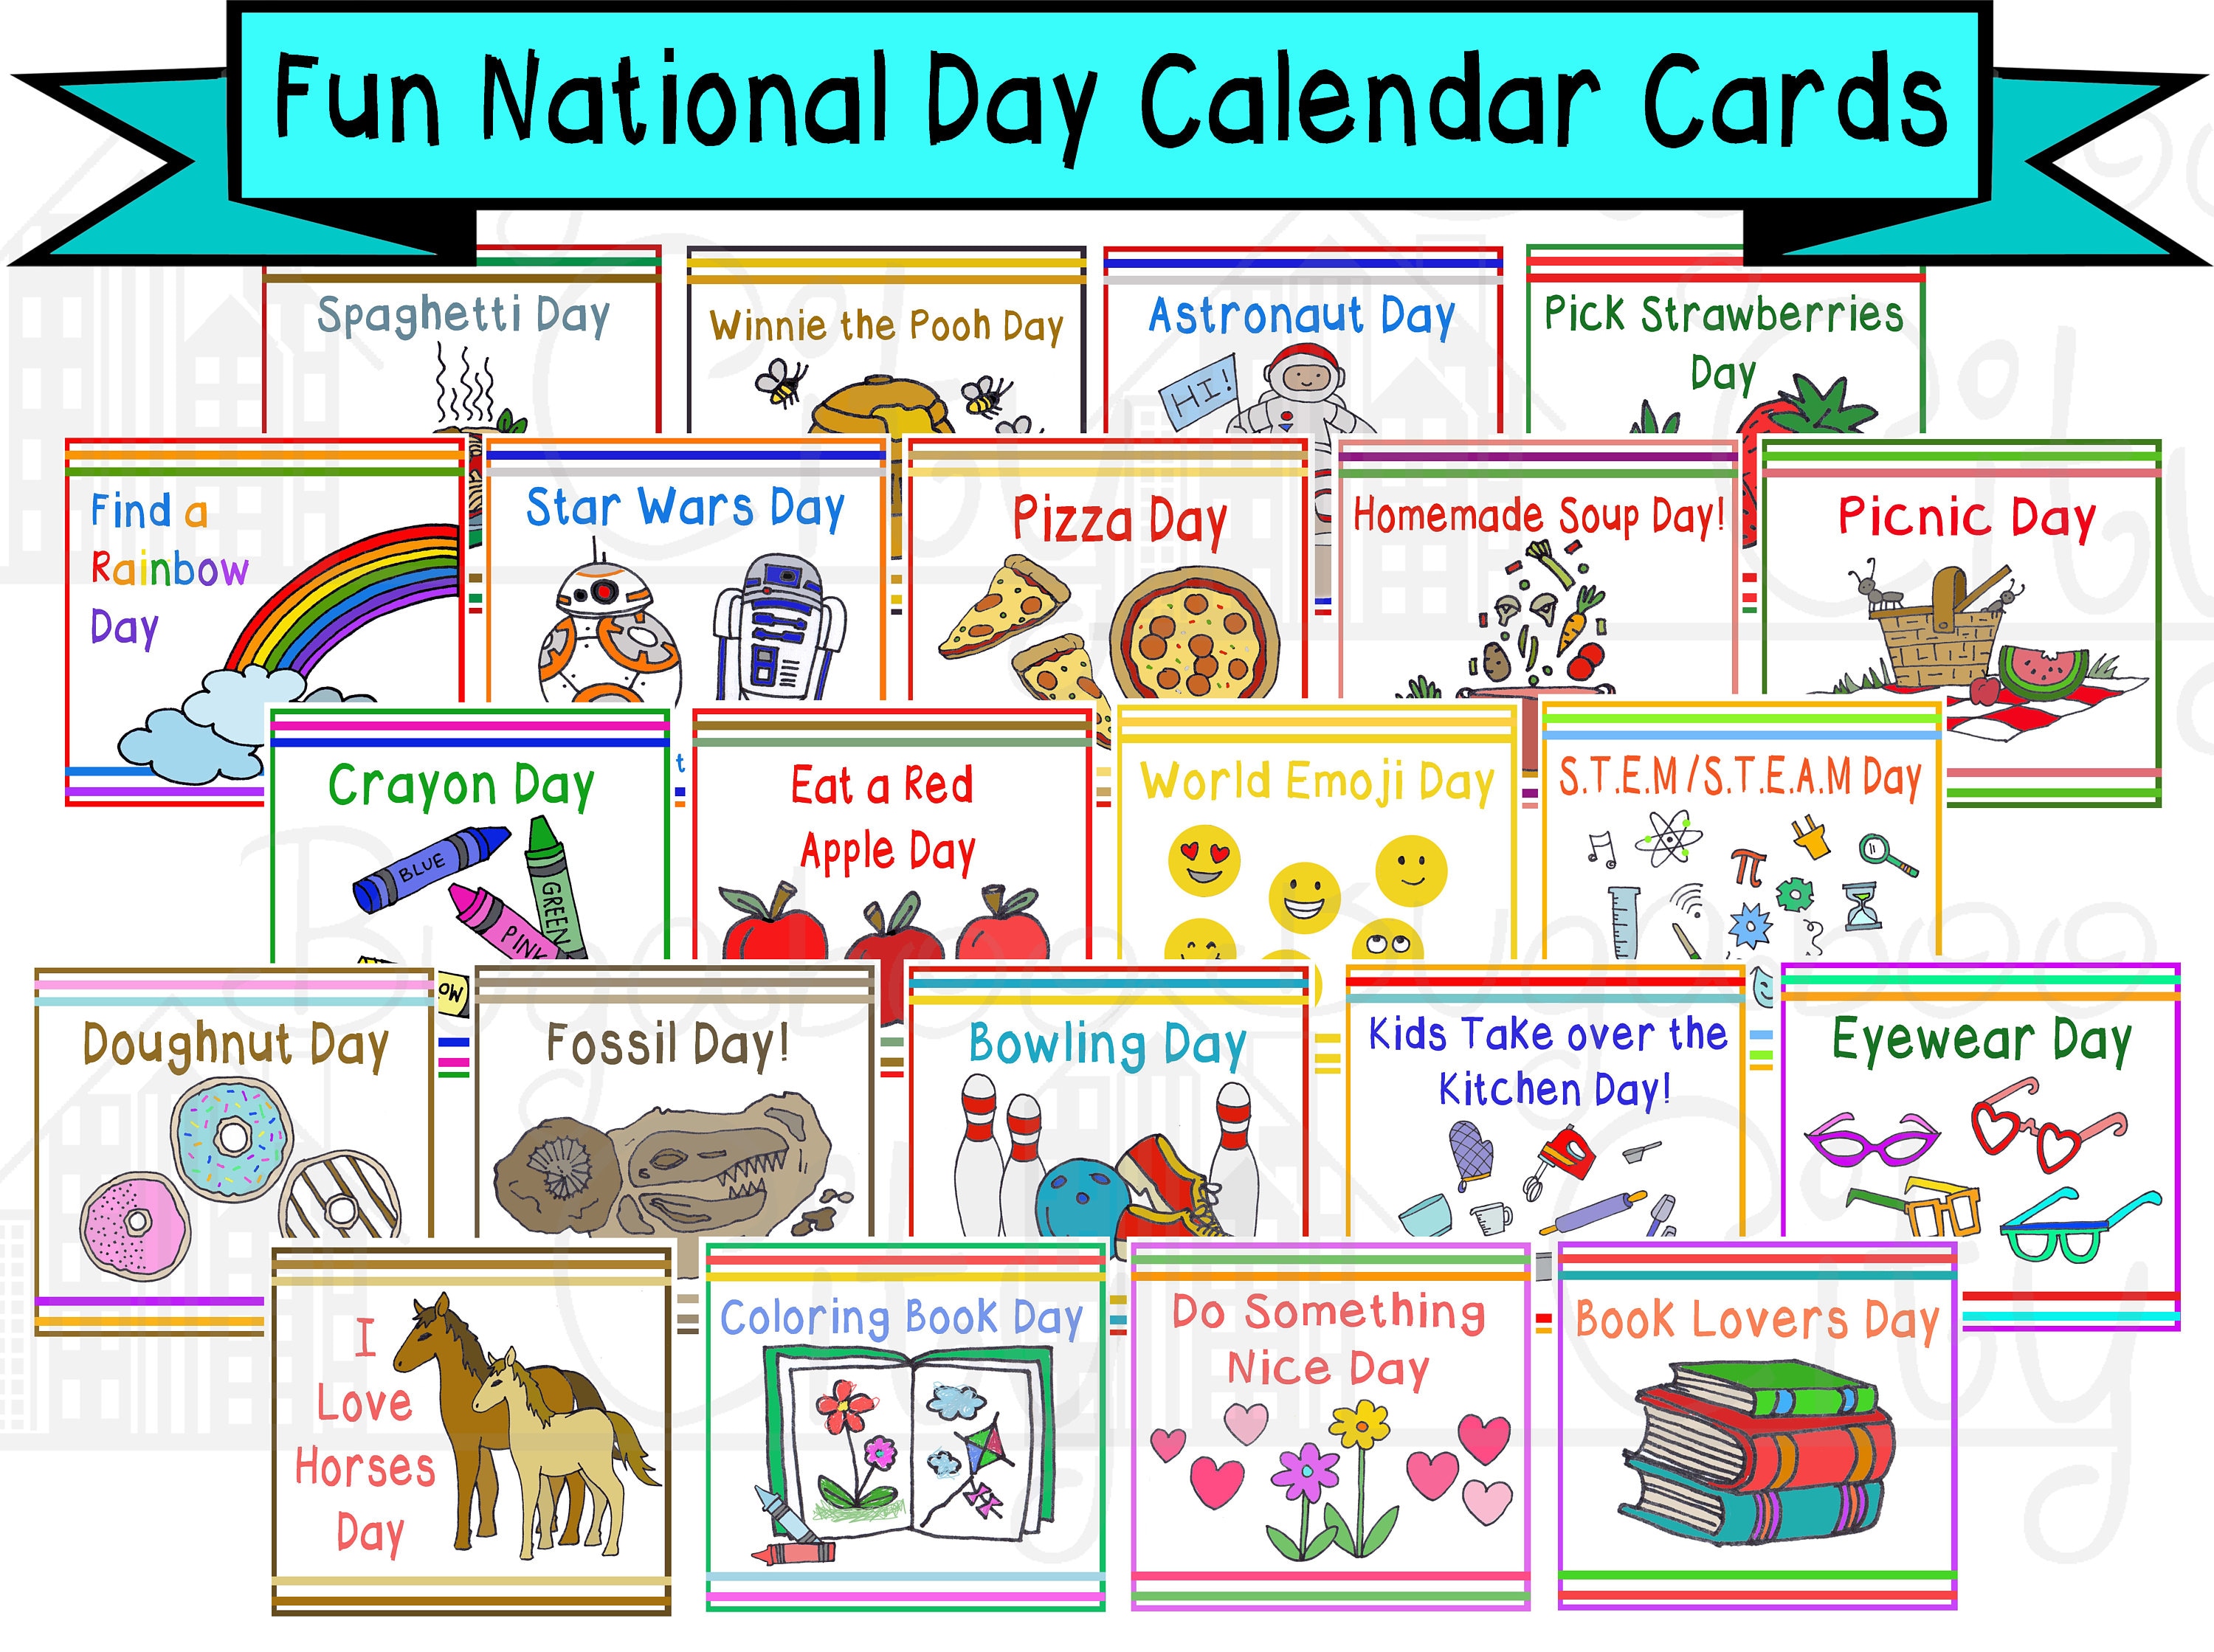 Fun National Day Cards for Children's Calendar Digital Etsy